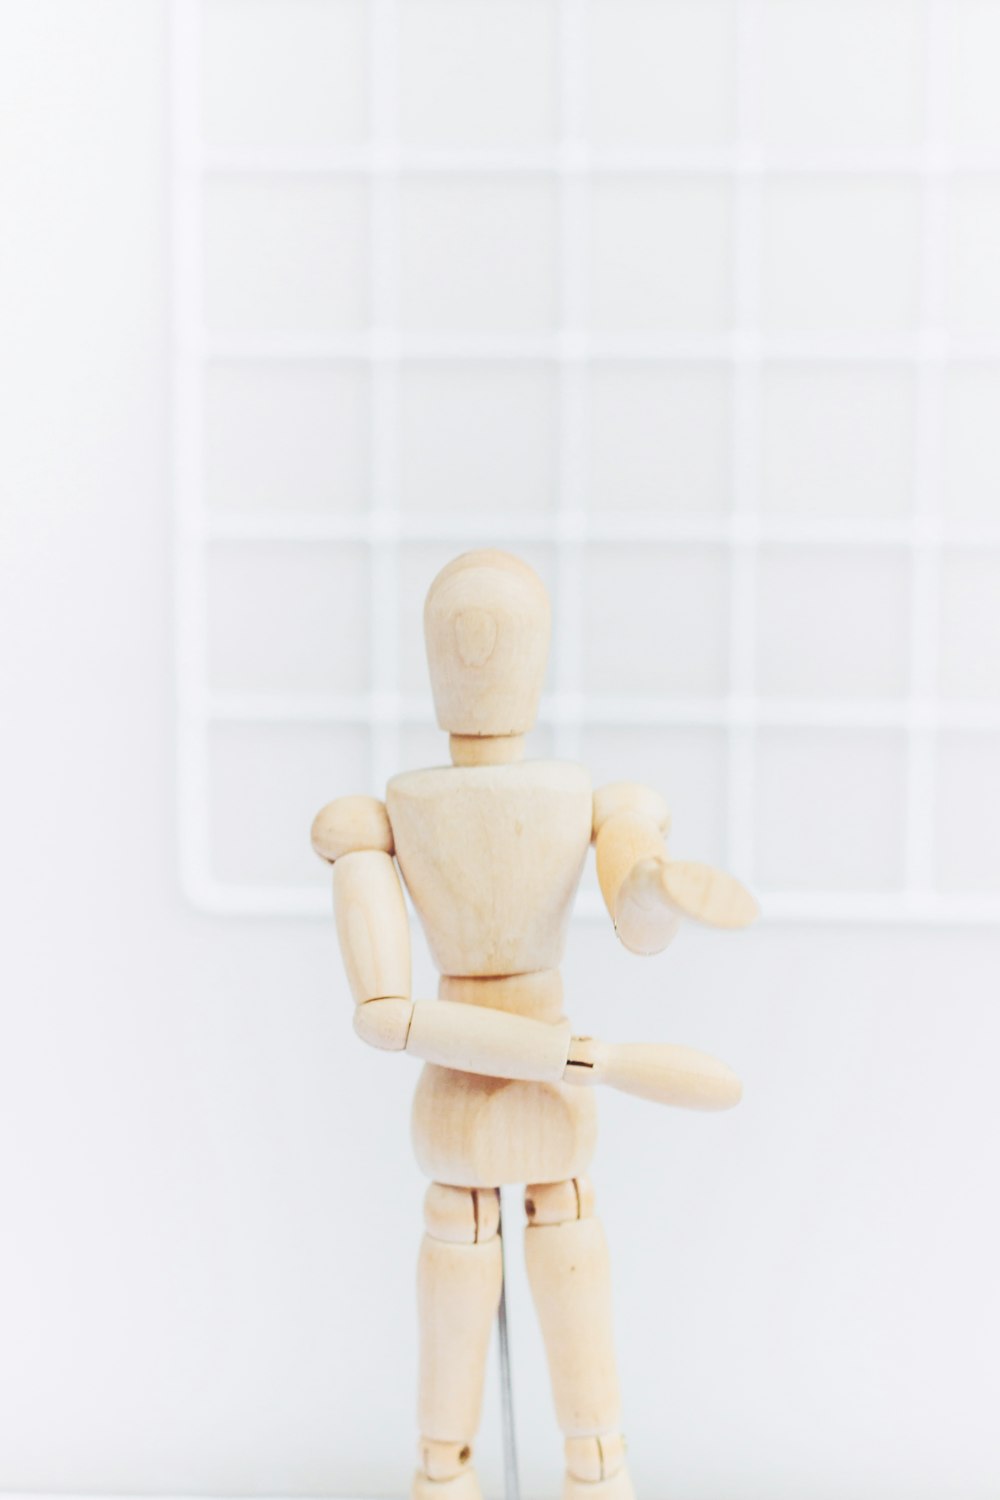 figurita humana de madera marrón sobre fondo blanco